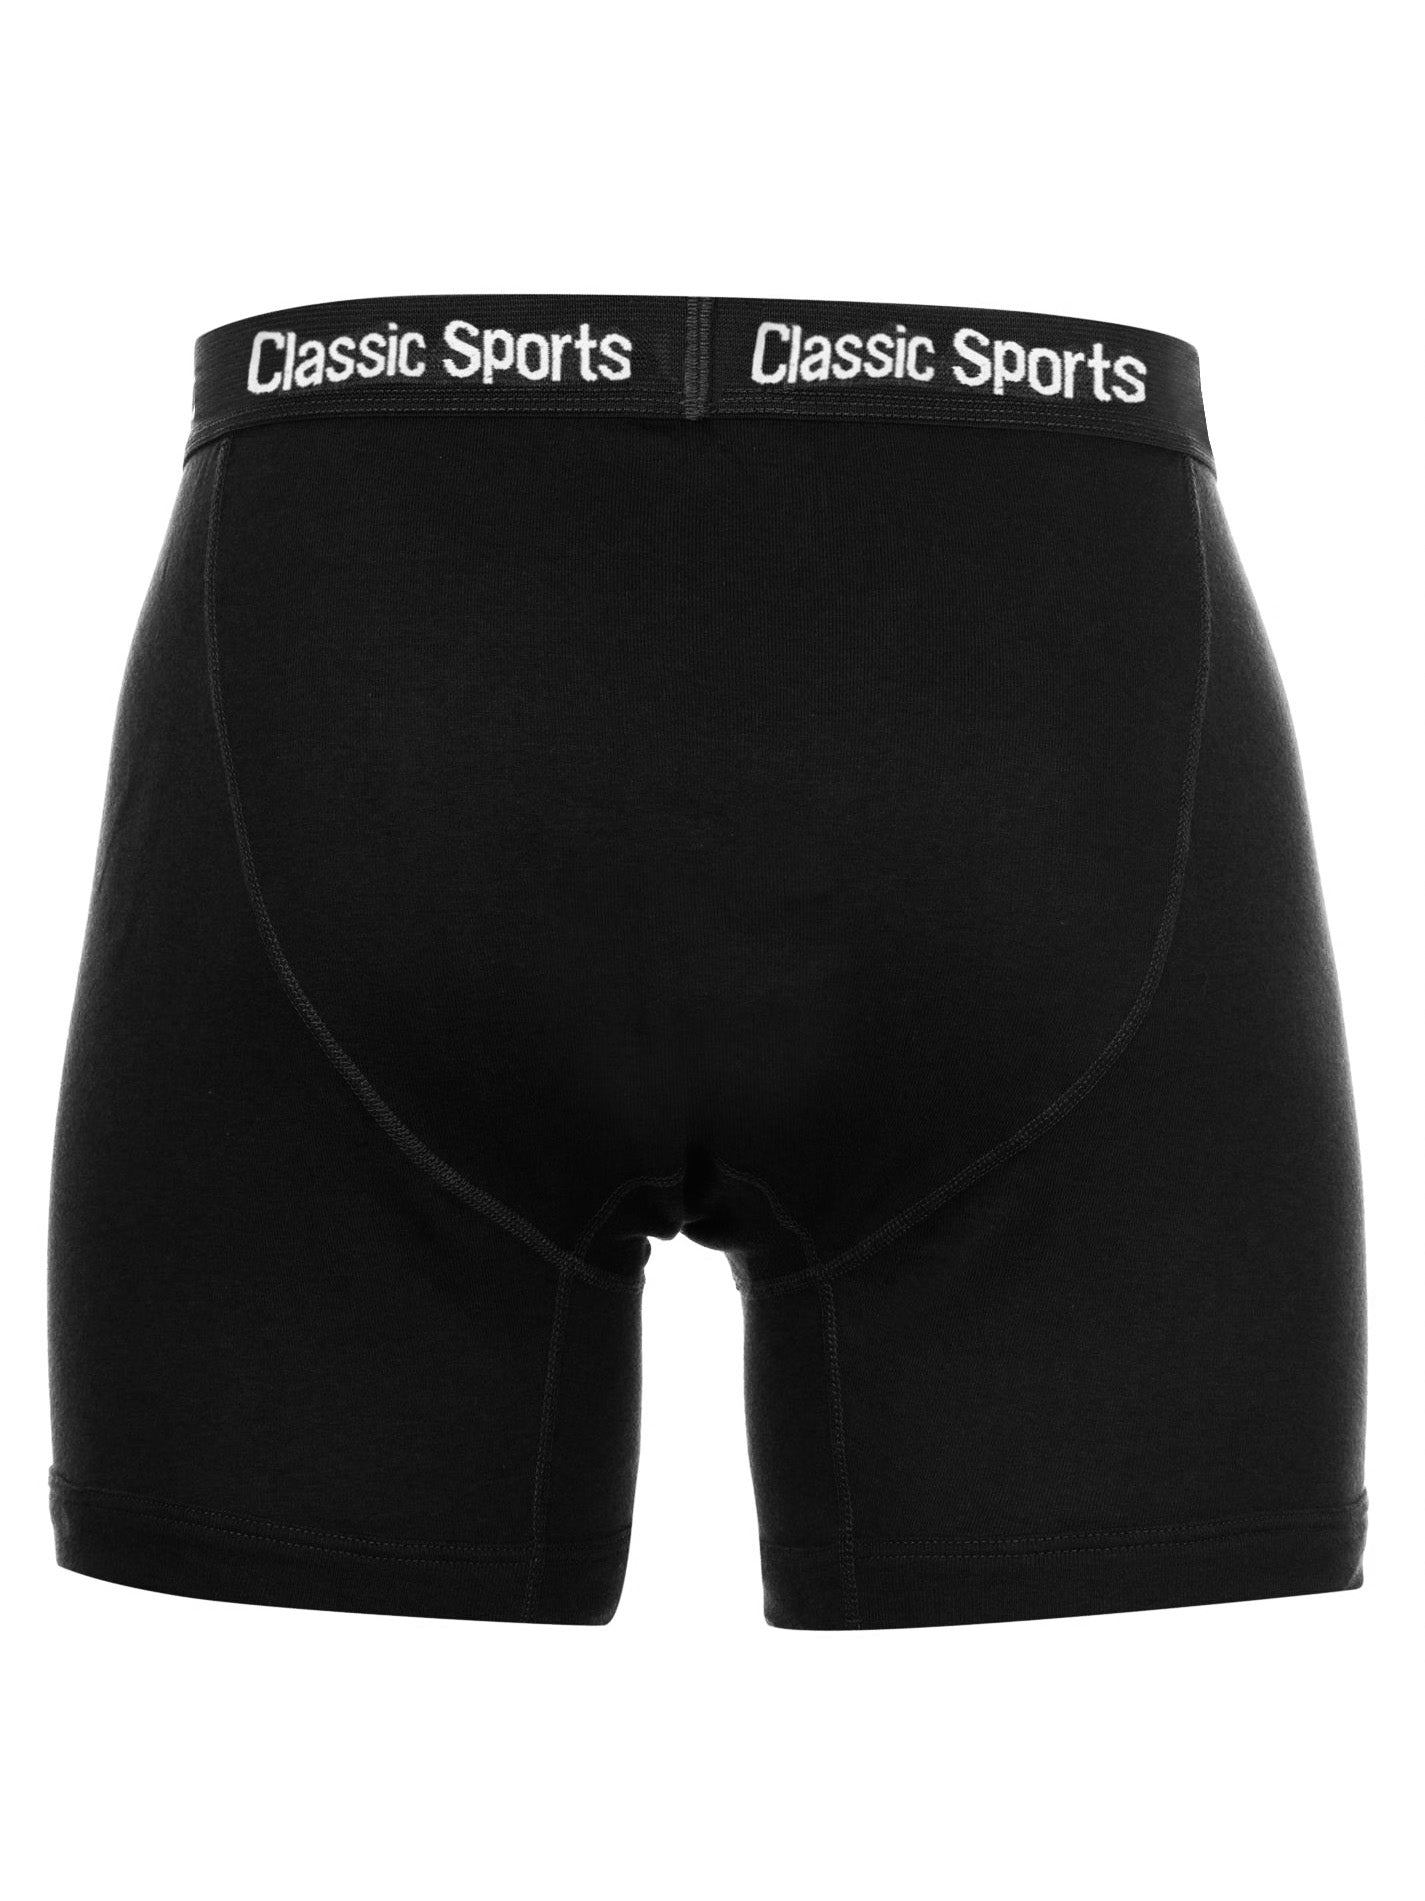 Classic Sport Single Jersey Boxer Brief For Men-Black-BR799